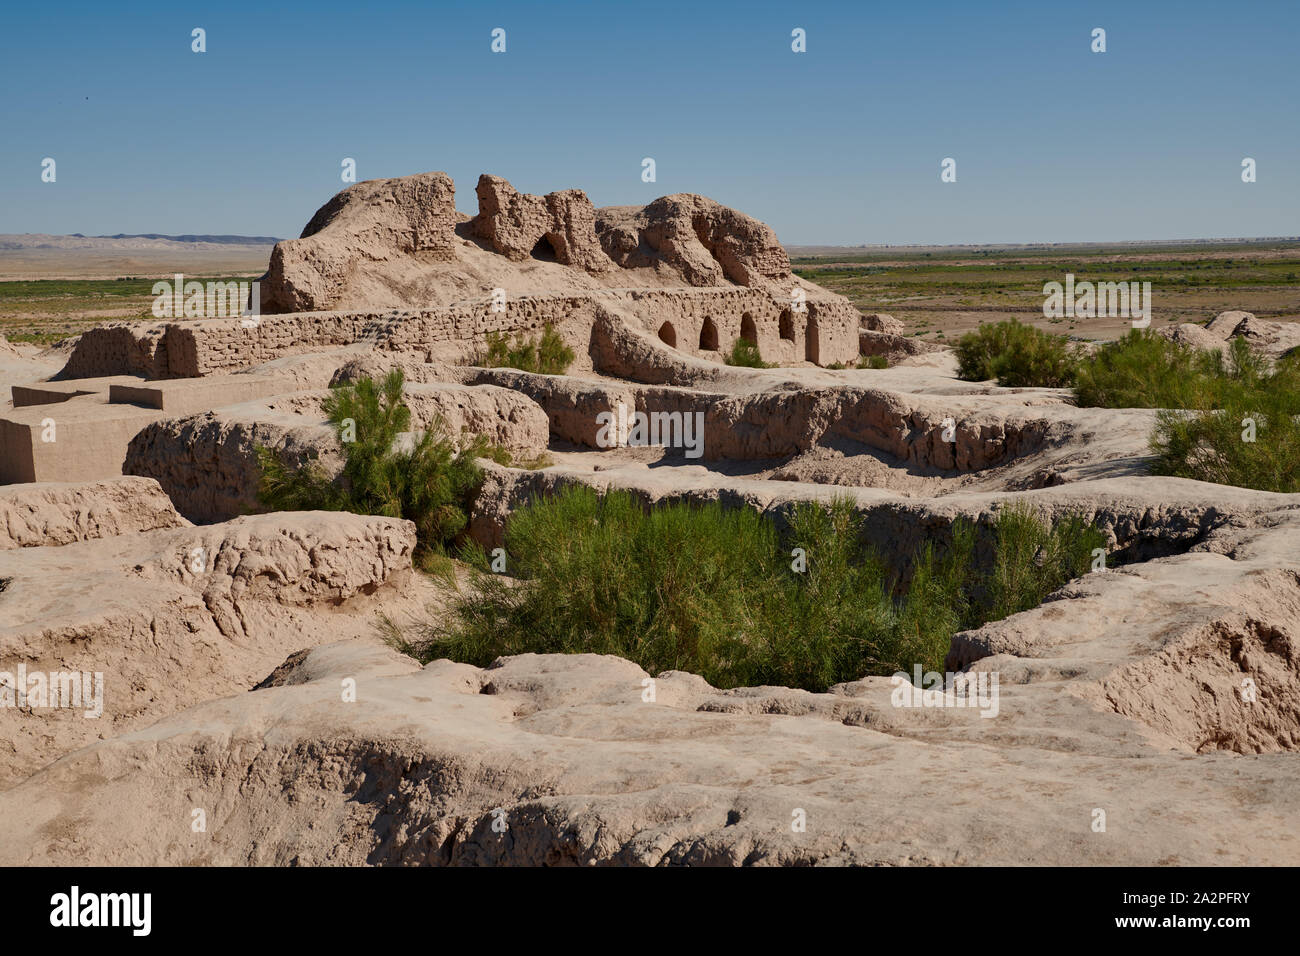 Khiva-Uzbekistan Tour - Tour to fortresses of ancient Khorezm.